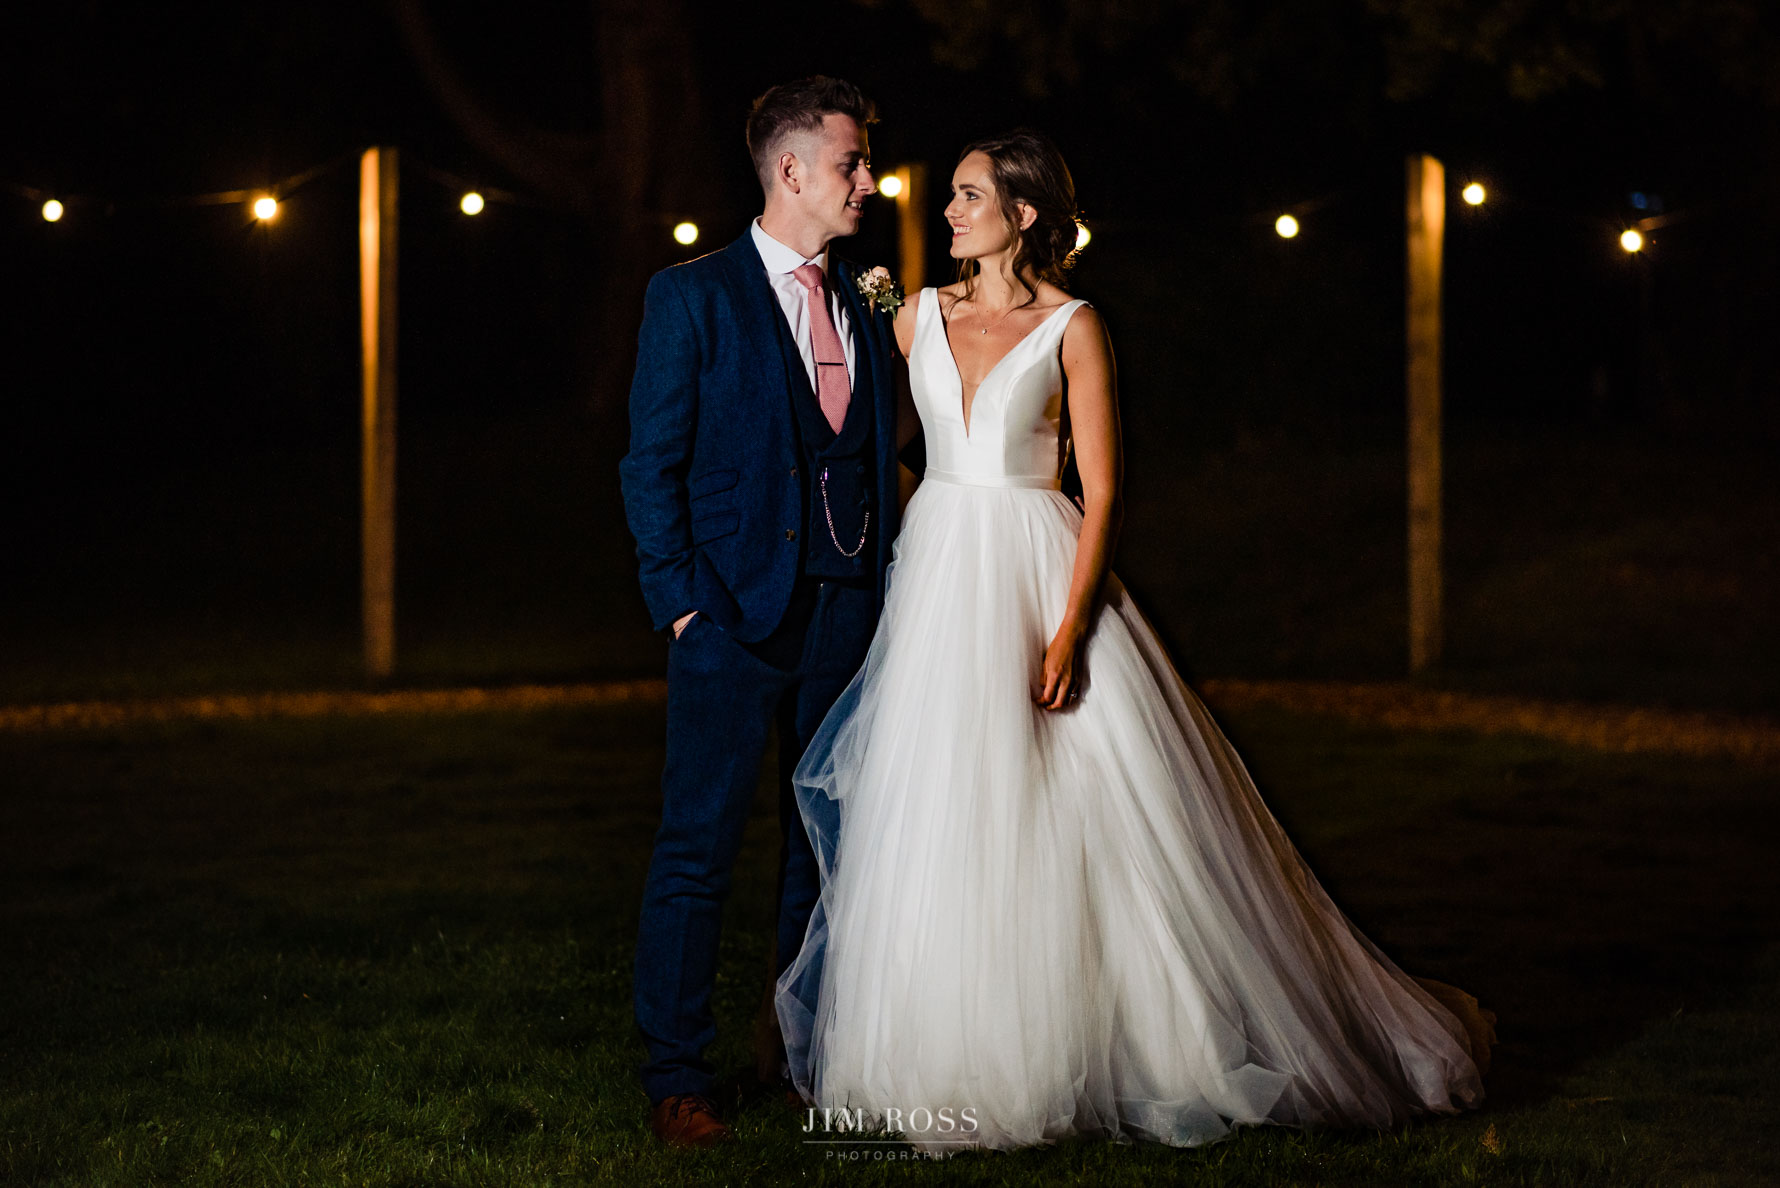 newlywed night portrait with festoon lights in background